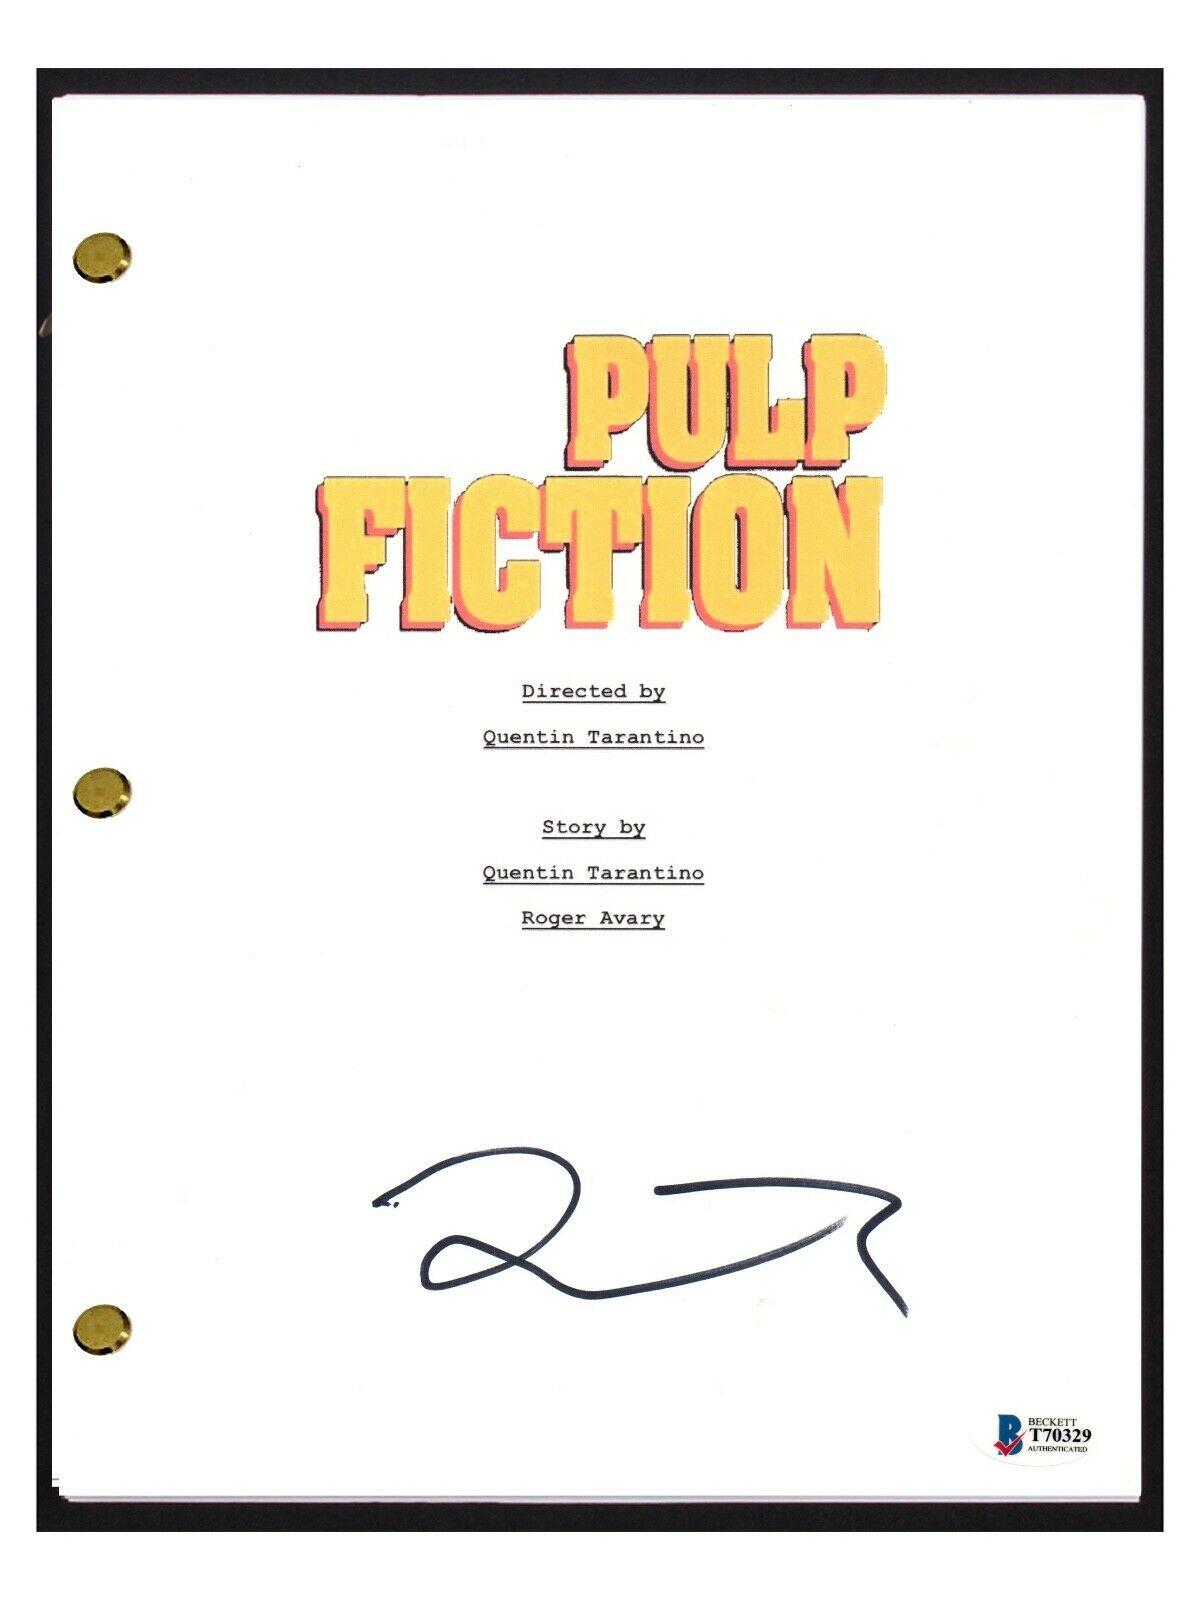 Quentin Tarantino Signed Autographed Pulp Fiction Movie Script Beckett Bas Coa